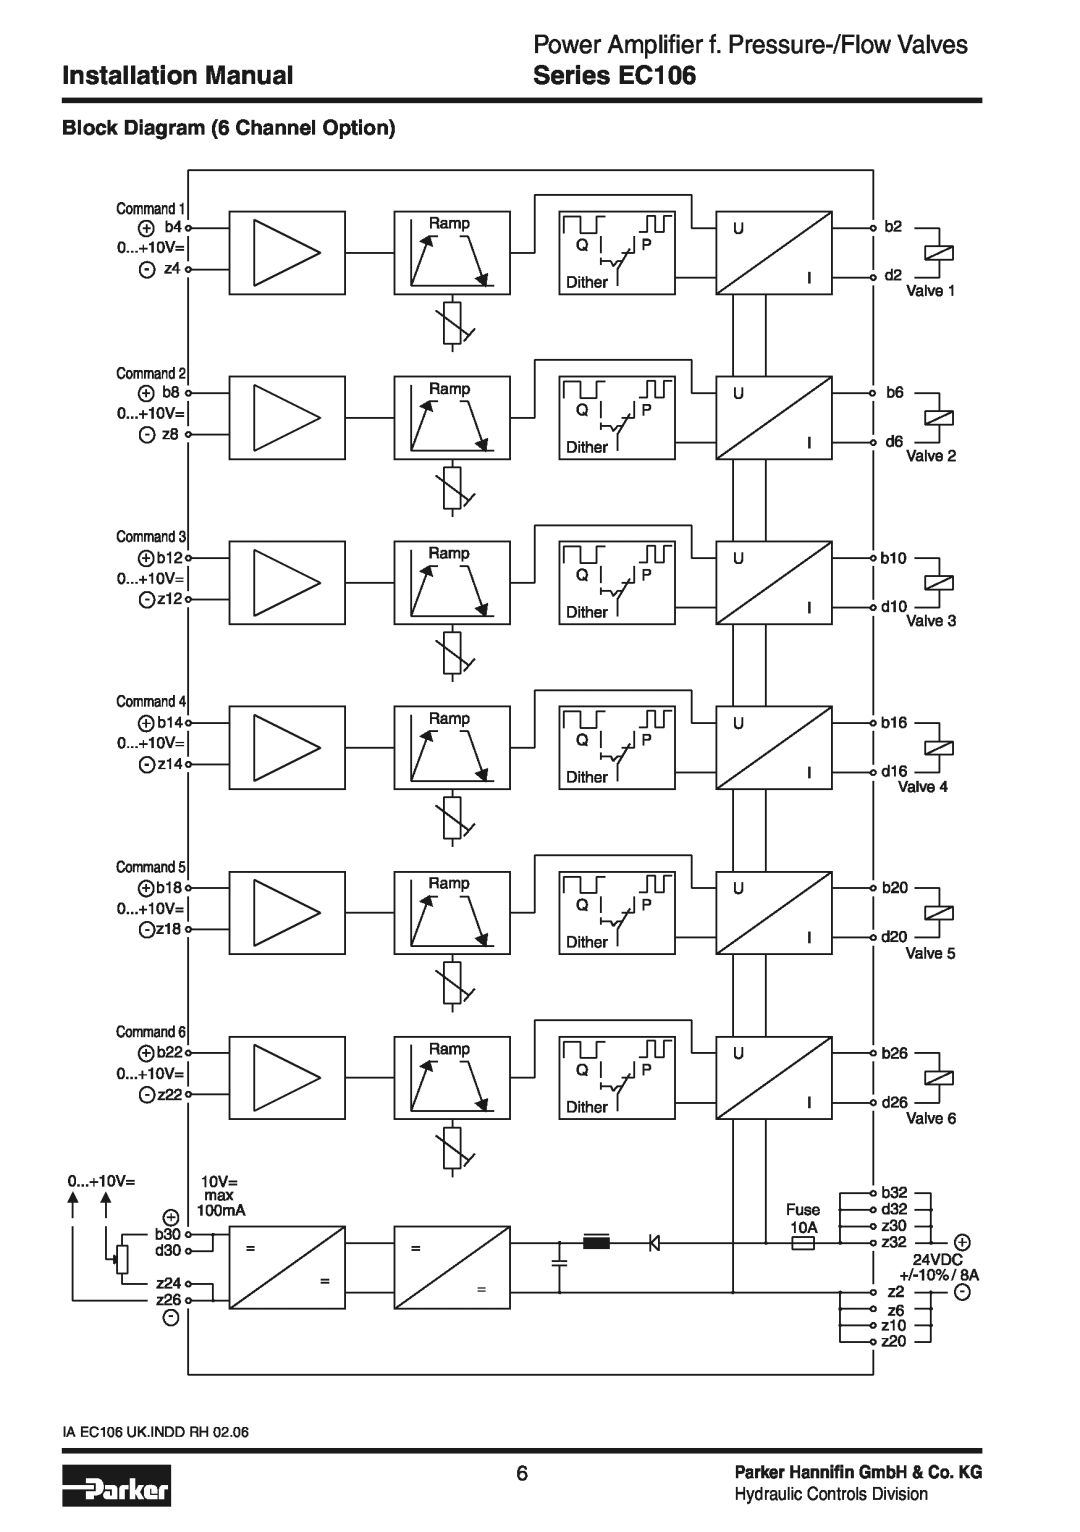 Parker Hannifin Block Diagram 6 Channel Option, Installation Manual, Series EC106, IA EC106 UK.INDD RH 